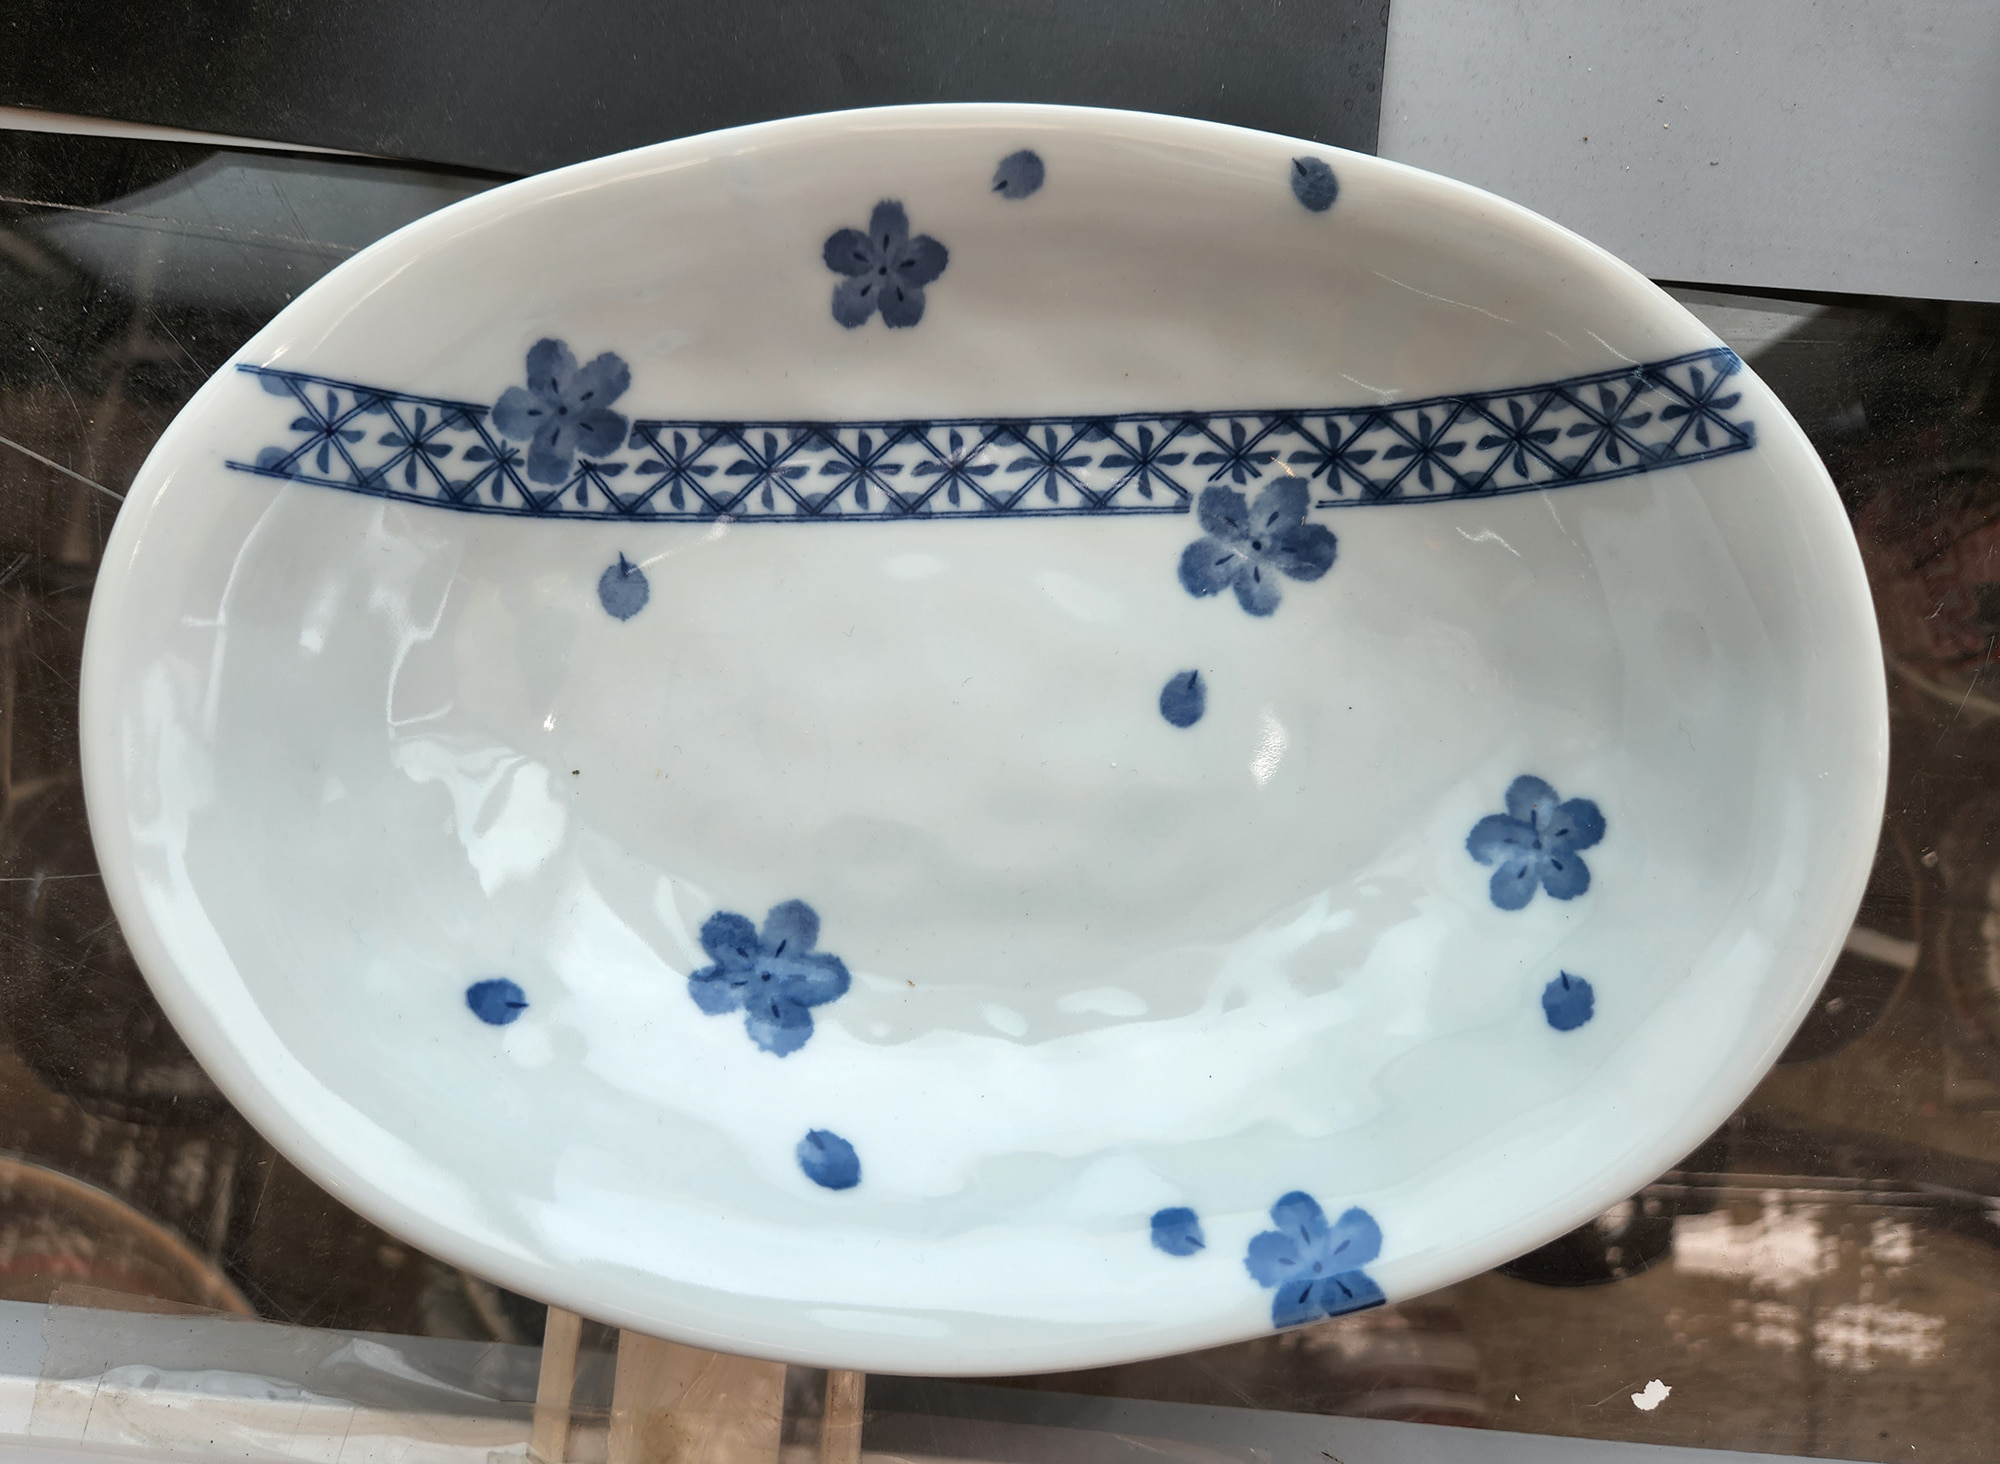 od0204-010/청색 꽃무늬 흰 타원볼/24x18.5x6cm/일본그릇